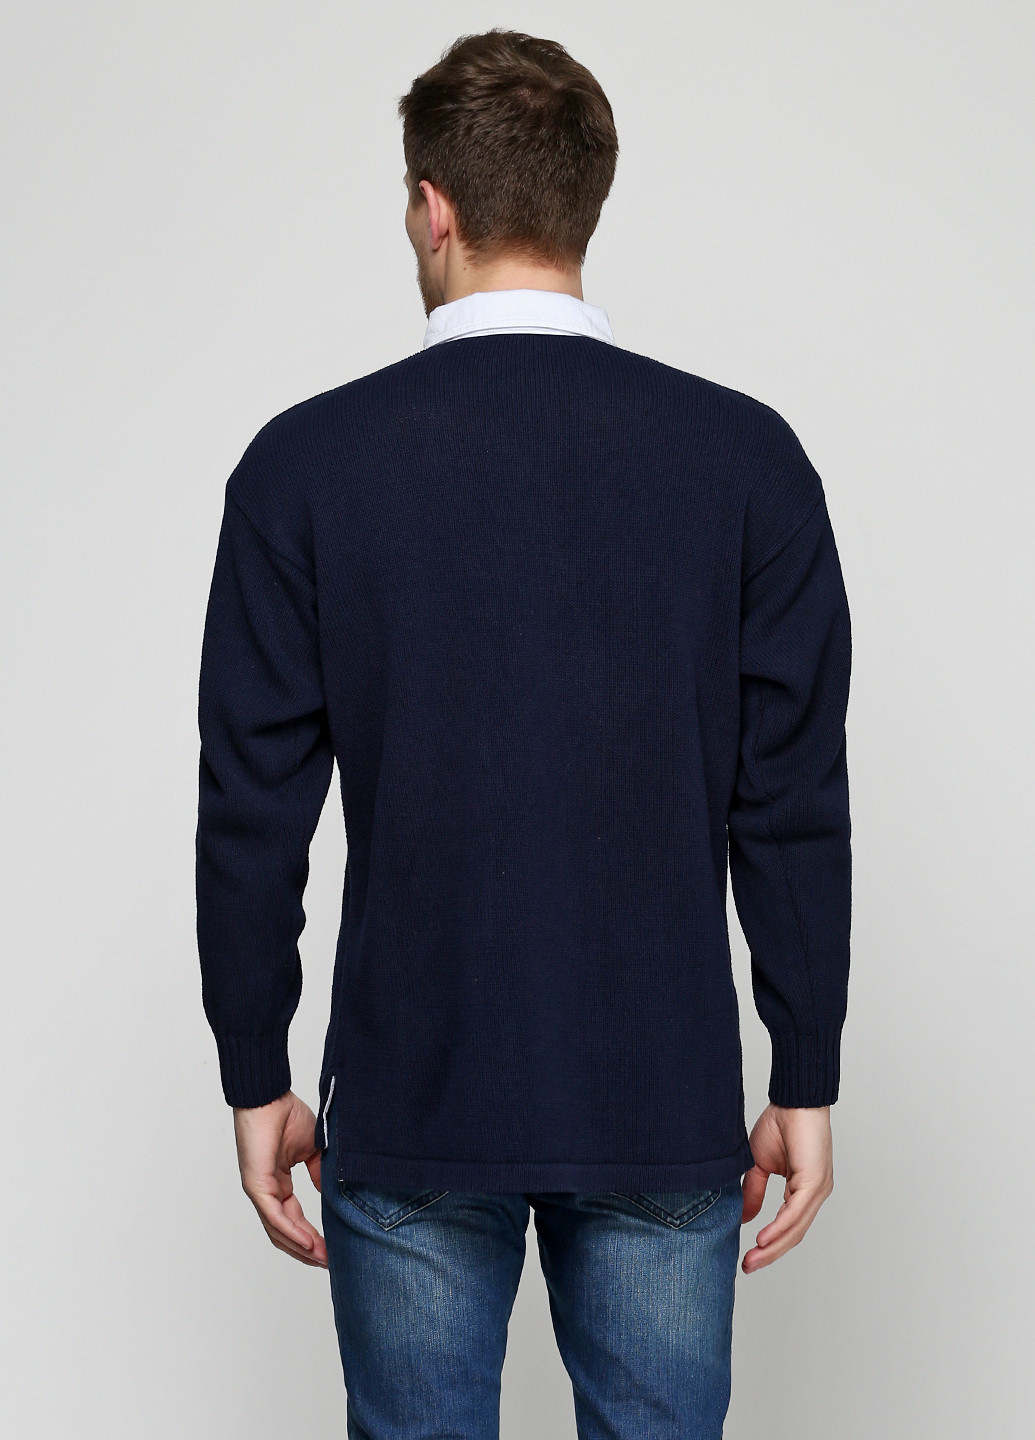 Синий демисезонный пуловер пуловер Barbieri